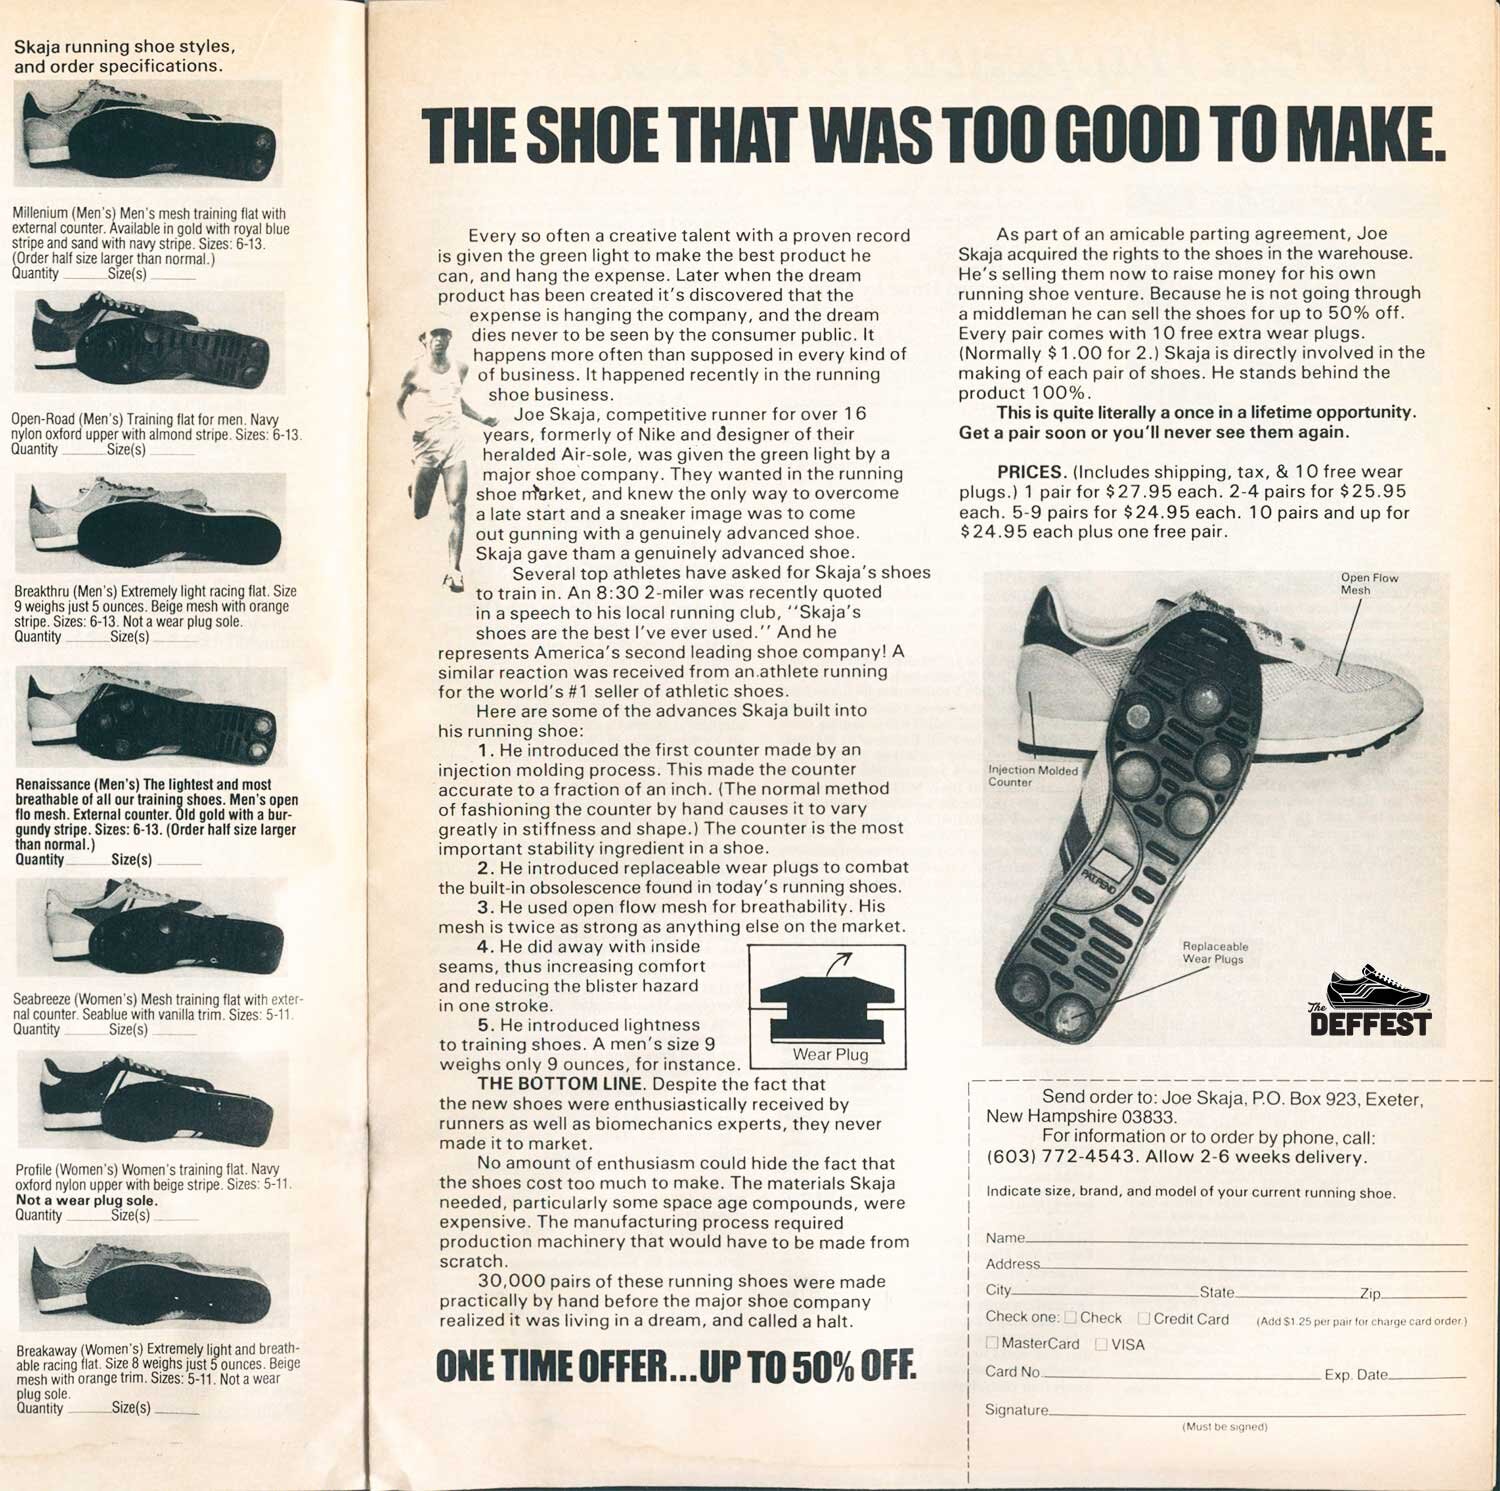 Keds Skaja vintage sneaker innovation ad @ The Deffest​​